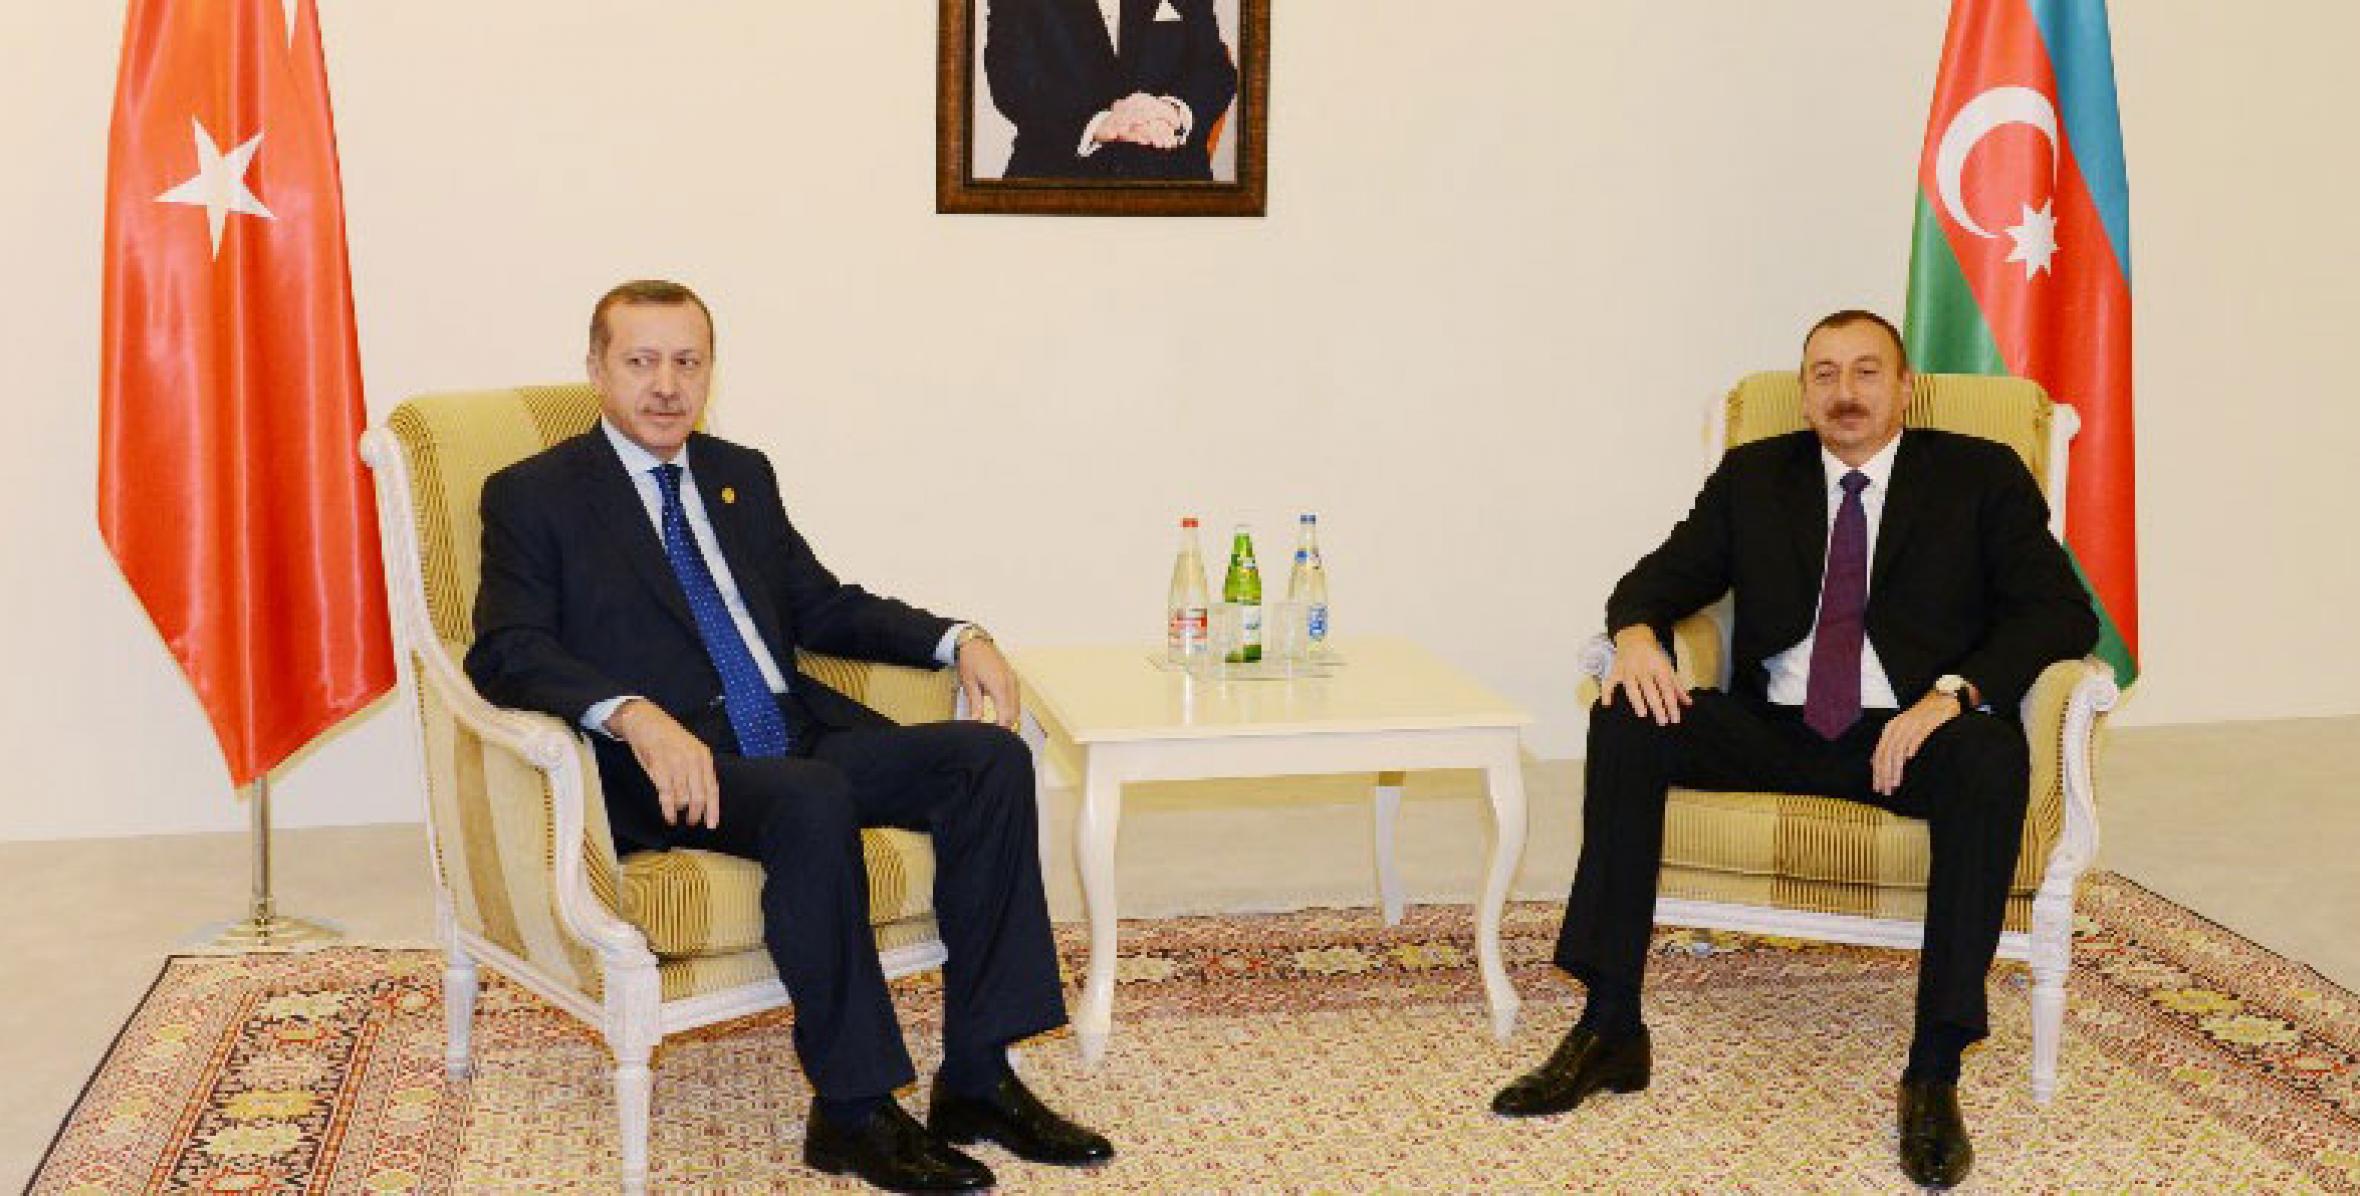 Ilham Aliyev met with Prime Minister of Turkey Recep Tayyip Erdogan